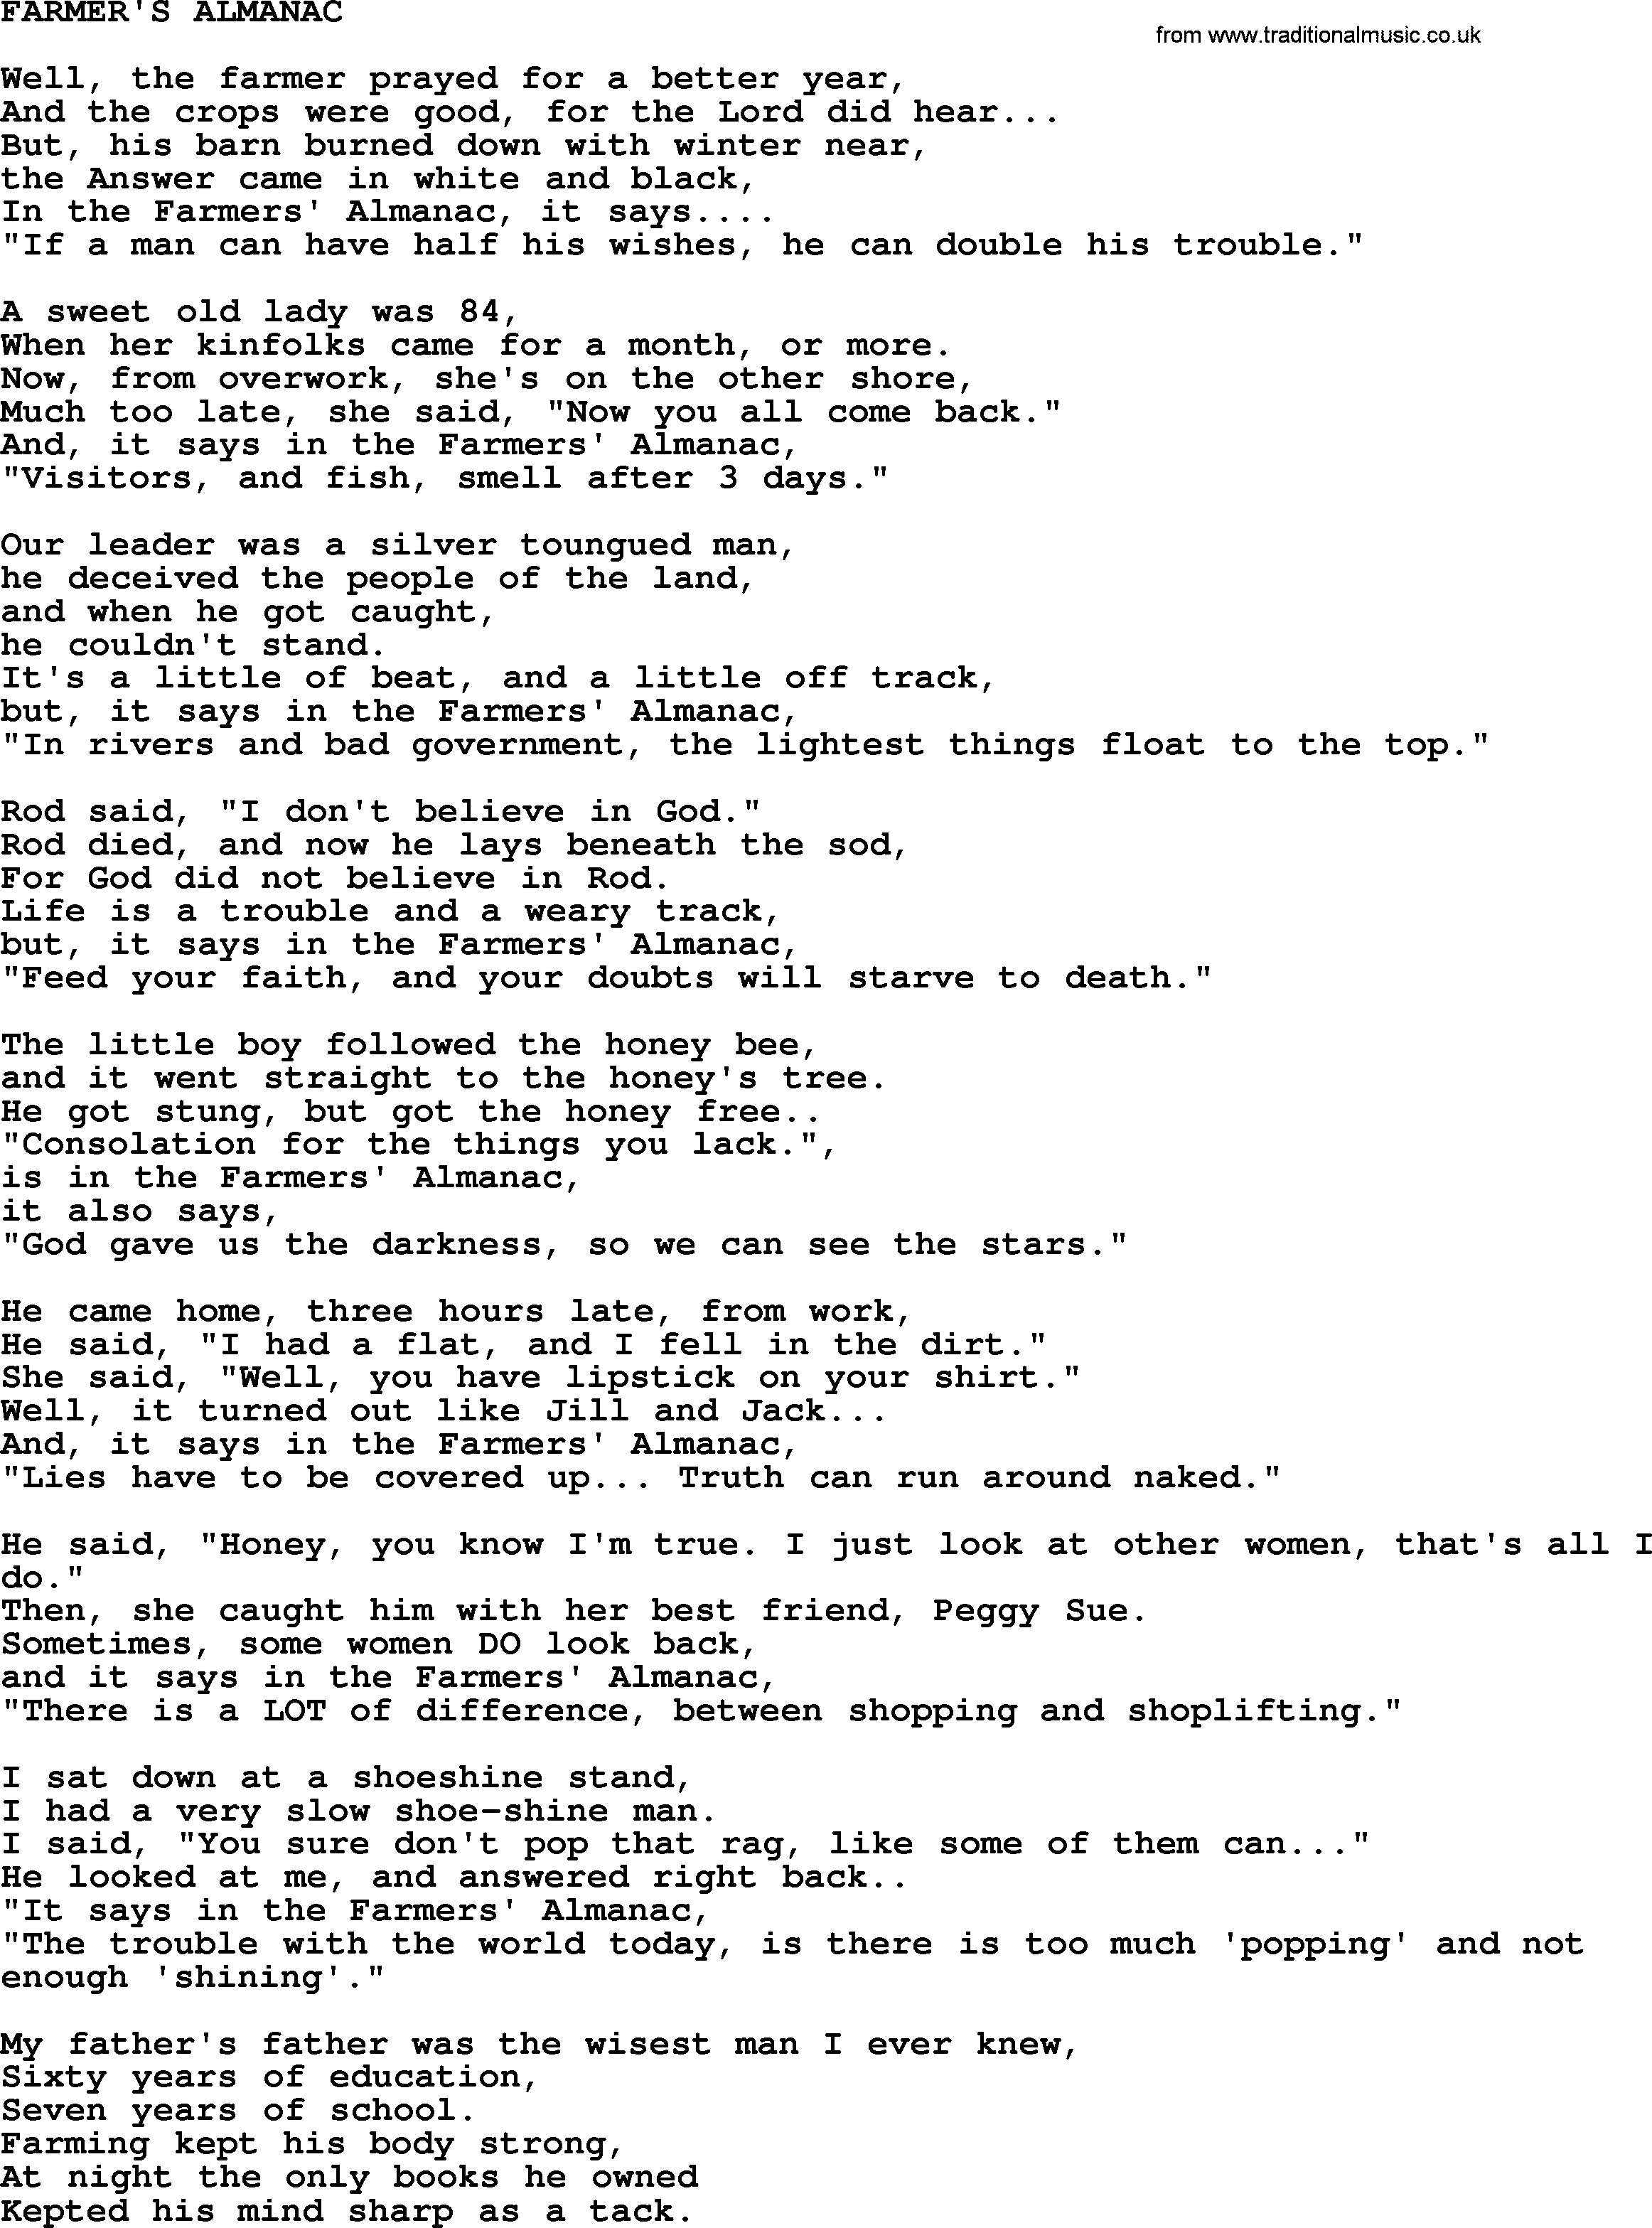 Johnny Cash song Farmer's Almanac.txt lyrics